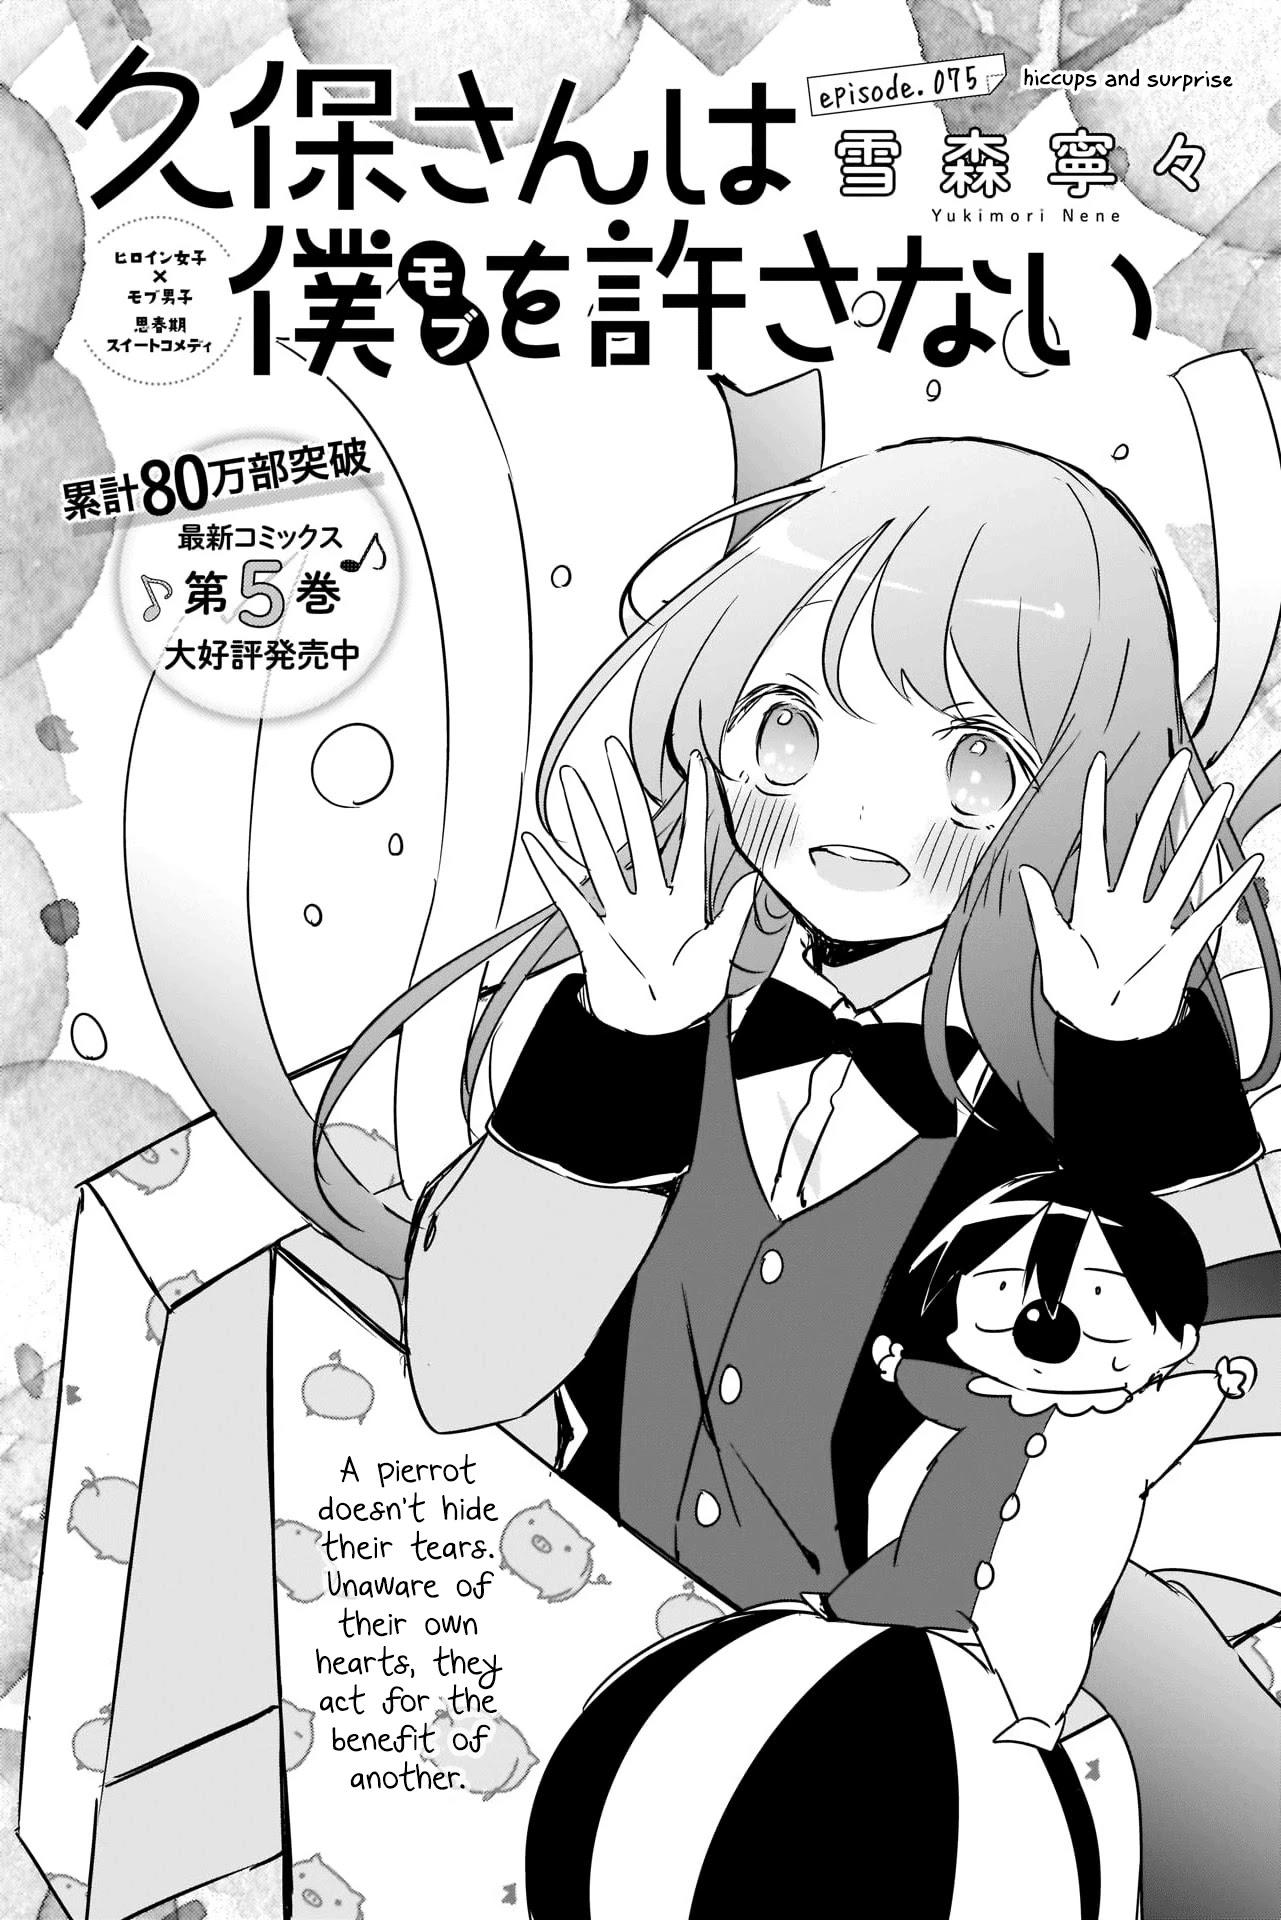 Kubo Won't Let Me Be Invisible, Chapter 138 - Kubo Won't Let Me Be  Invisible Manga Online